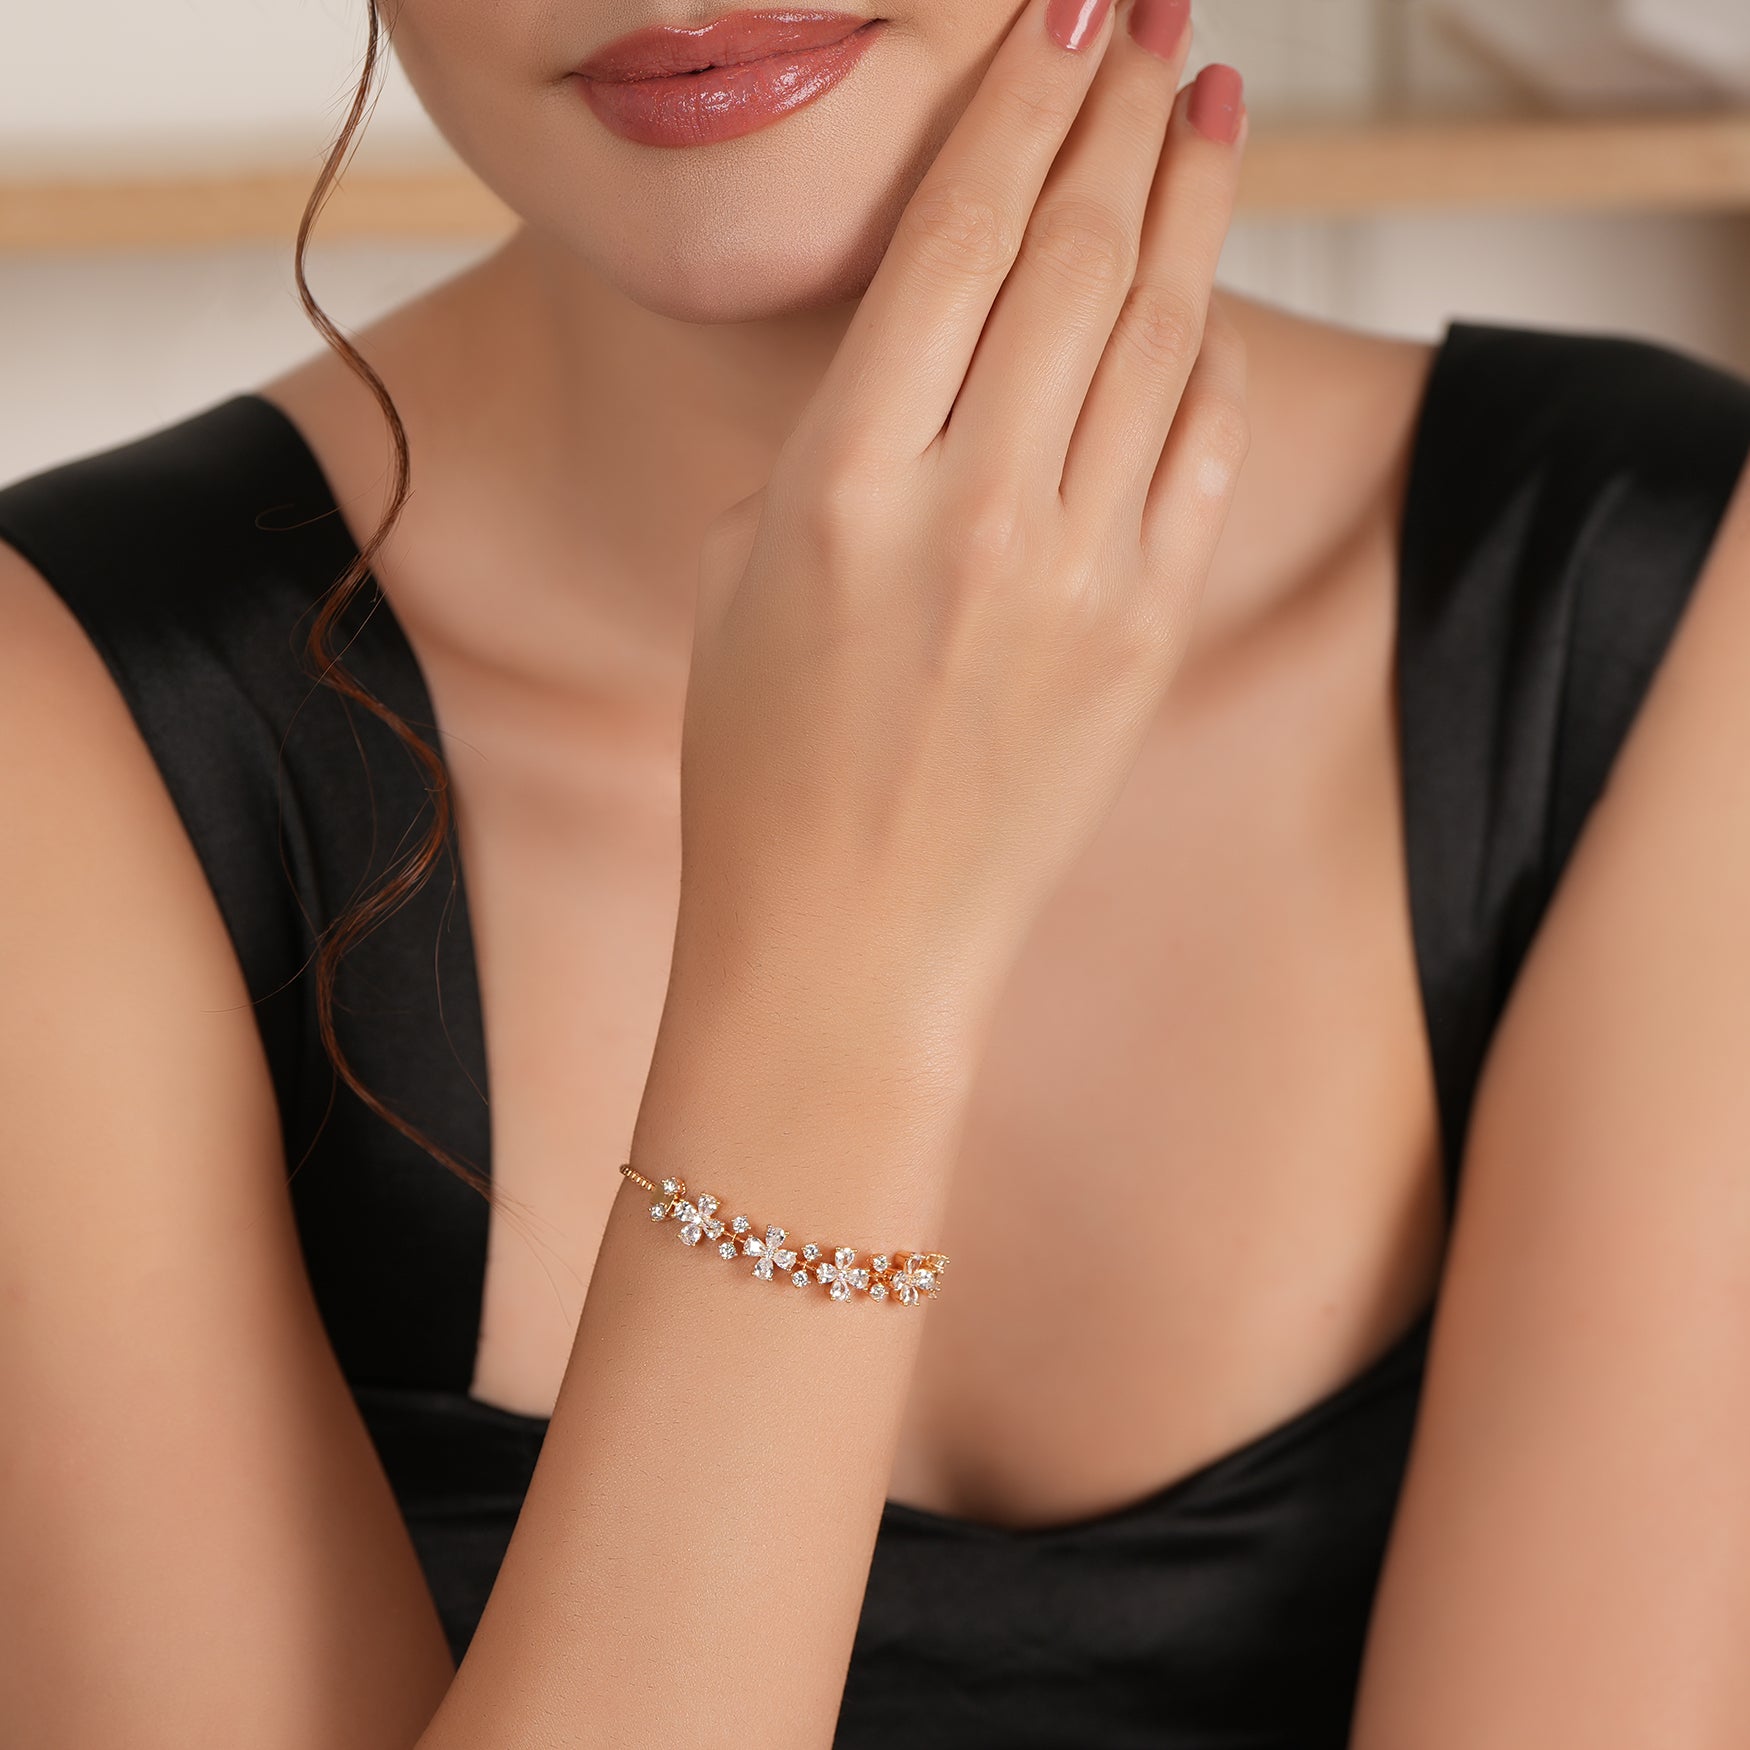 Cute elegant floral cz diamond bracelet for women